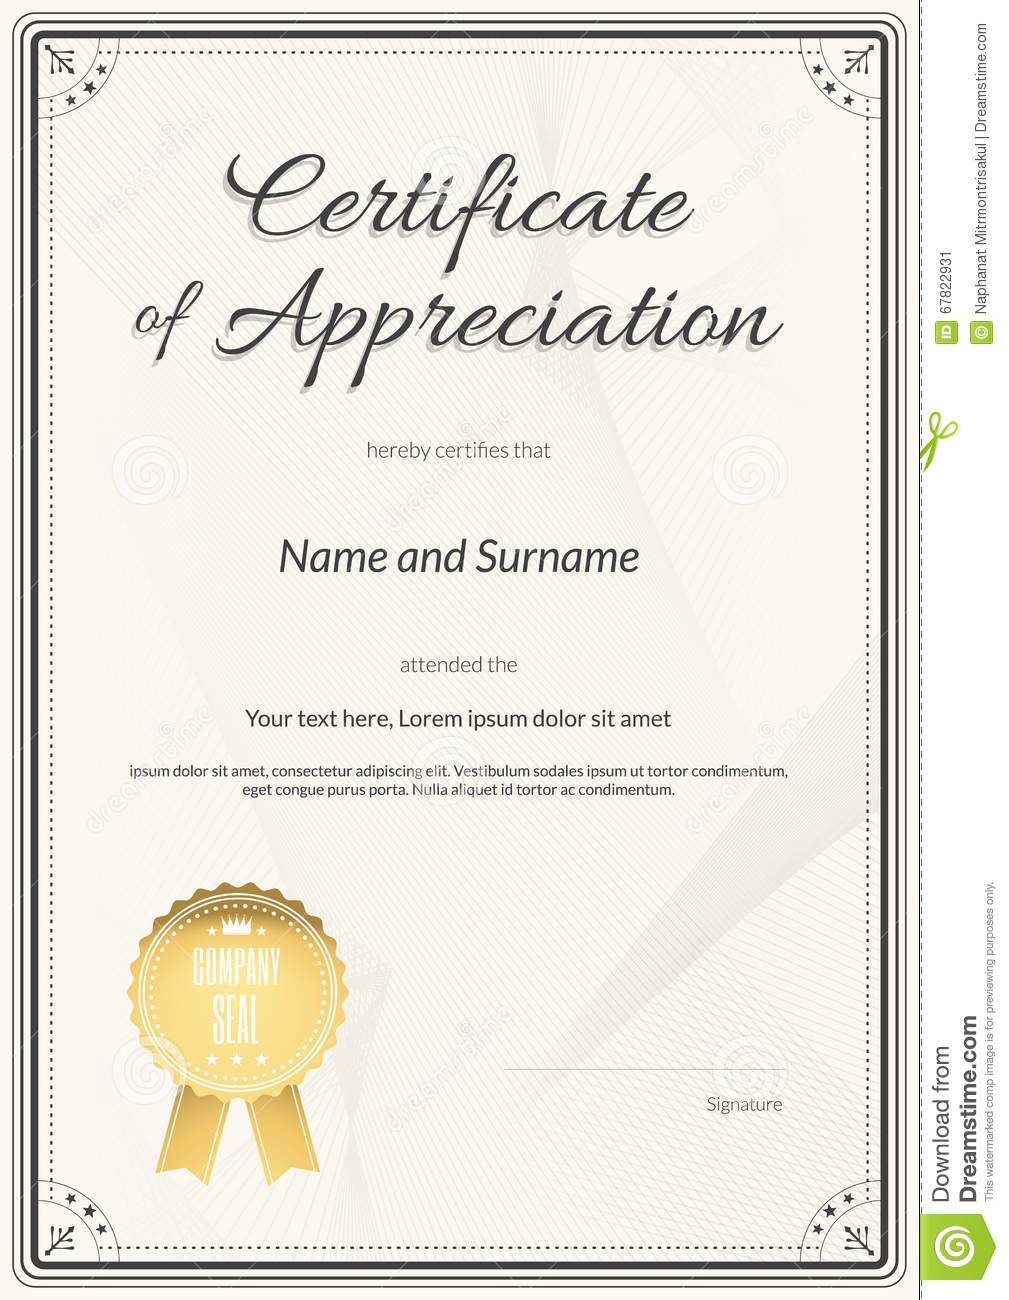 Certificate of Appreciation Template in Vector Stock Vector